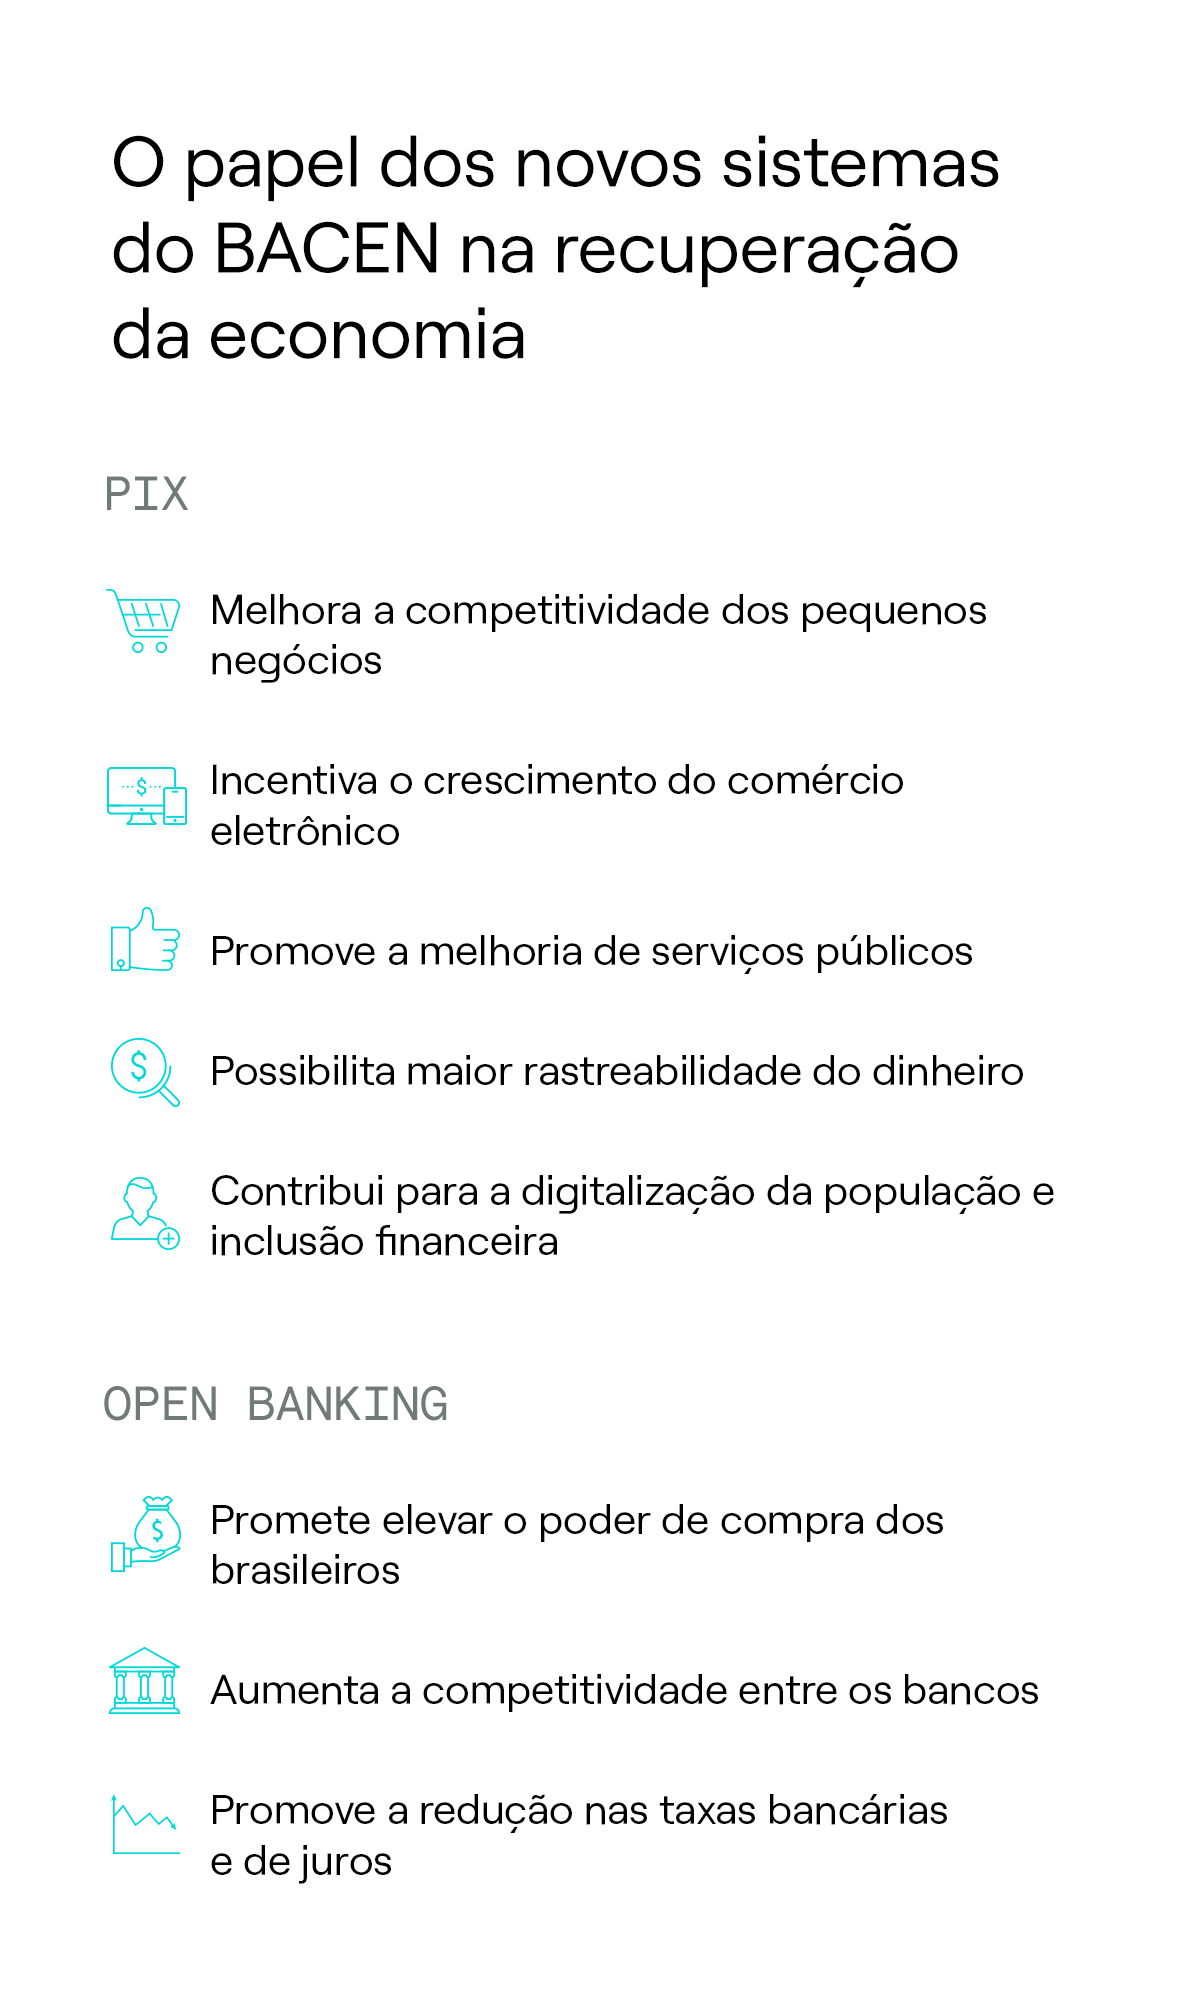 pix e open banking